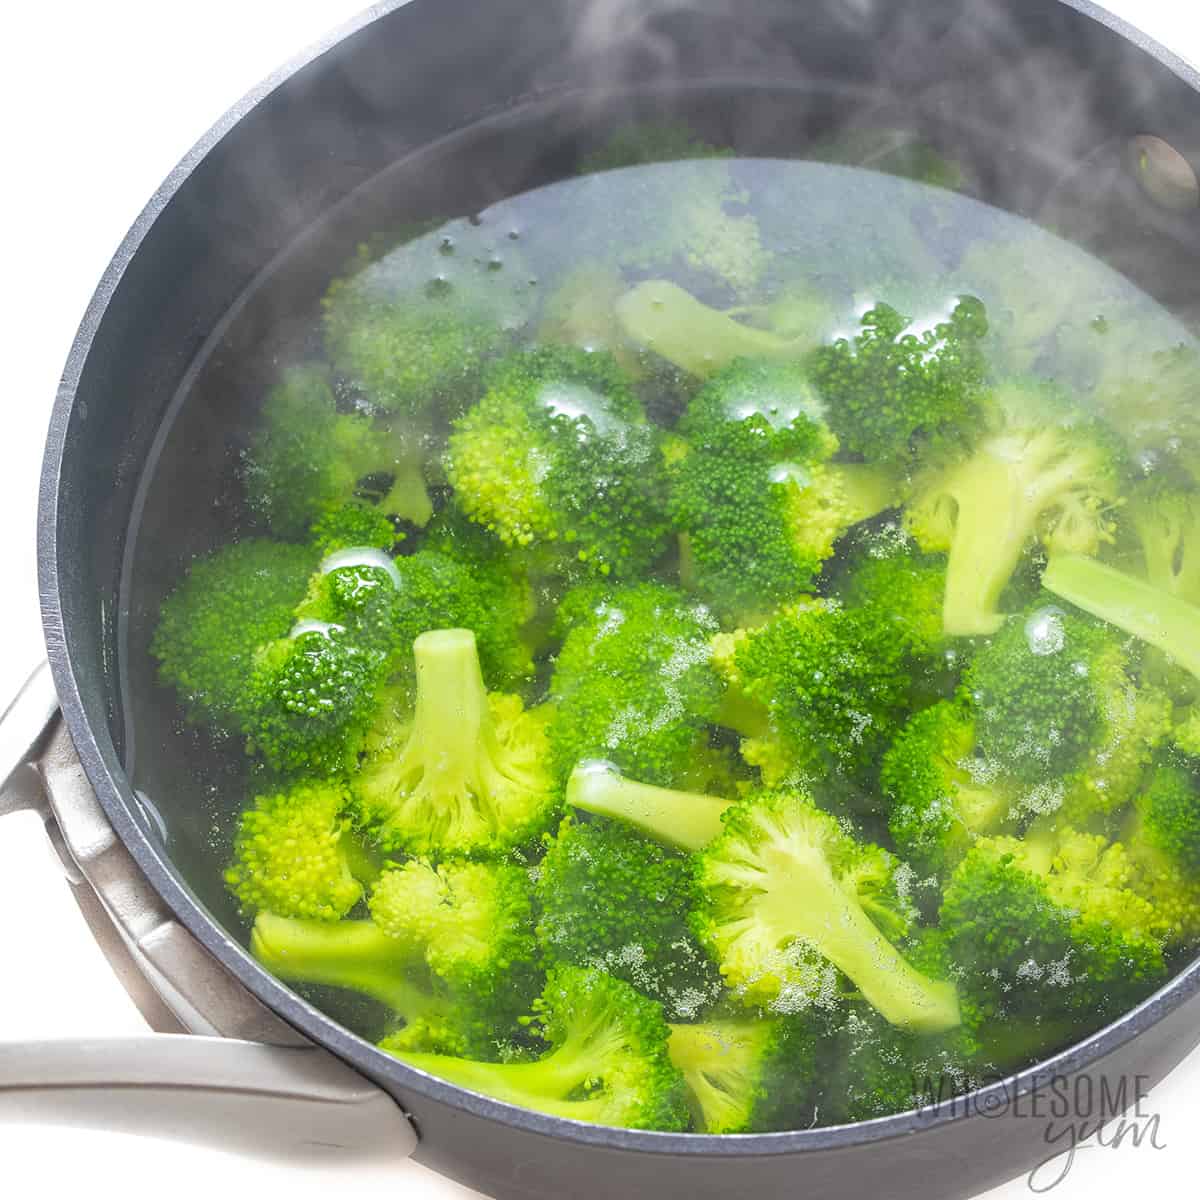 Broccoli boiled in a pot